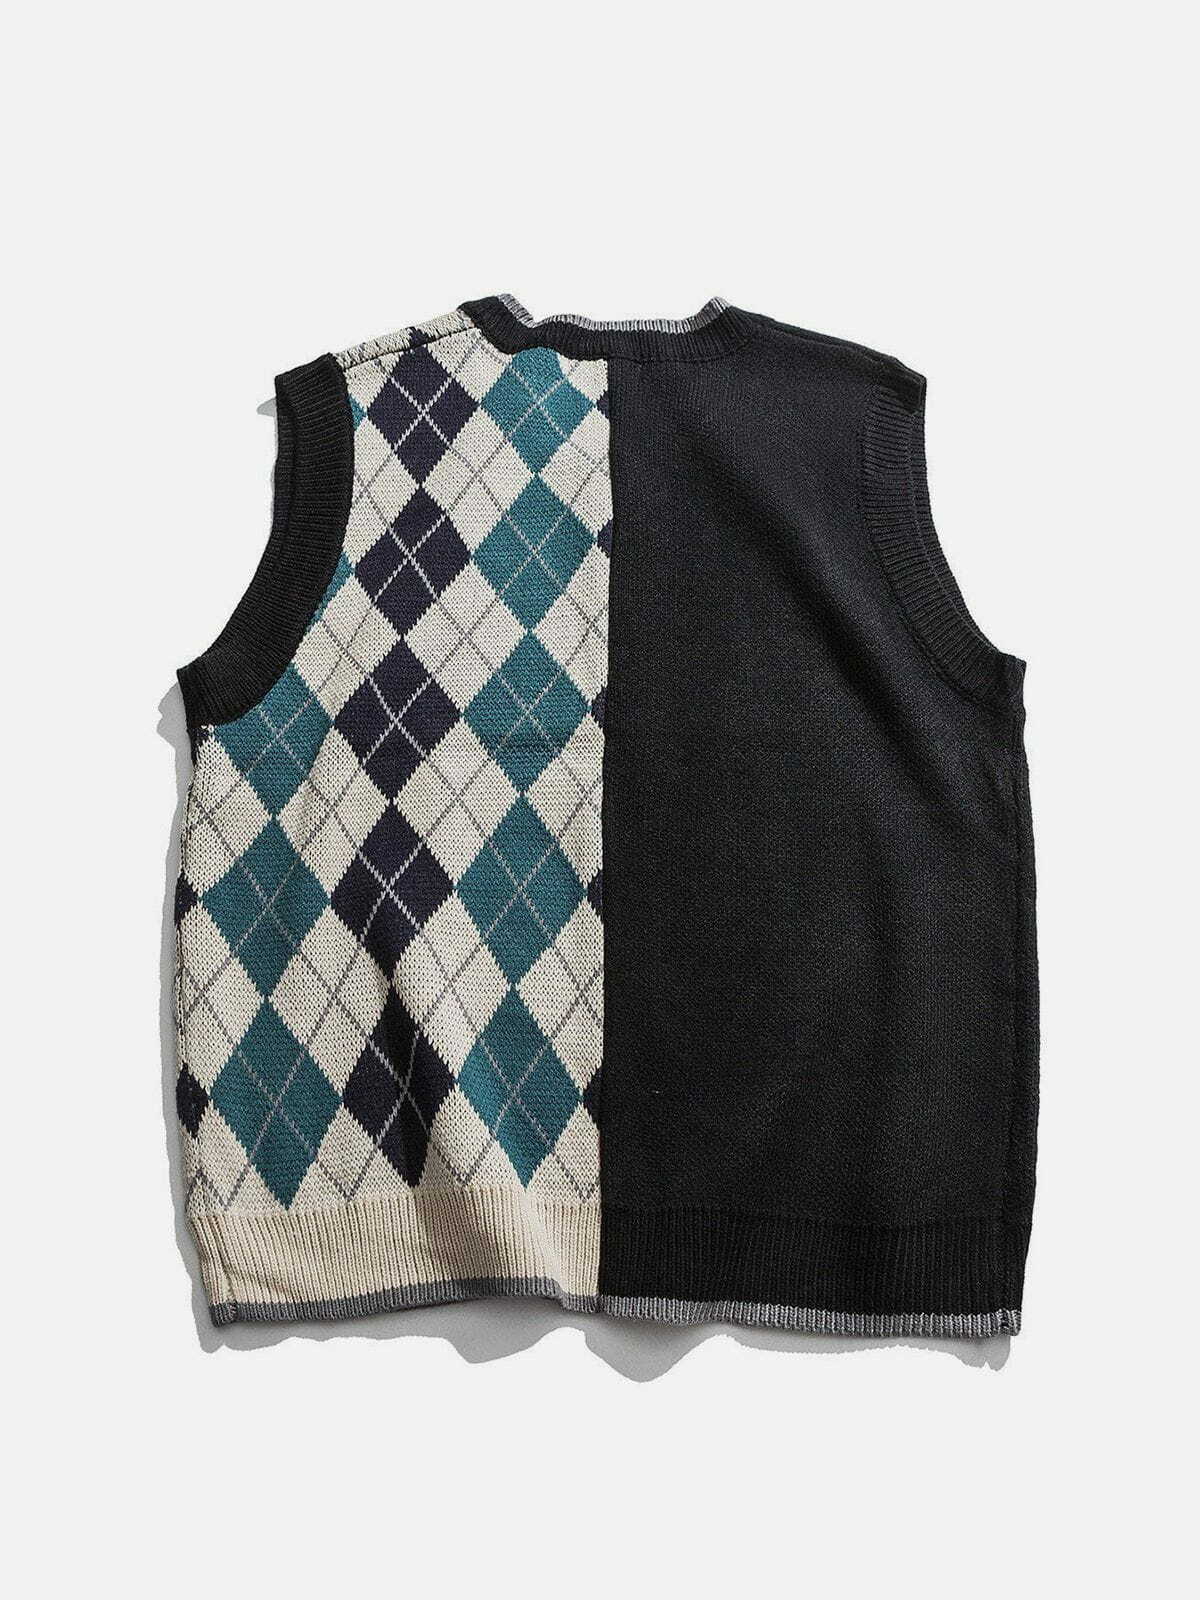 diamond stitch sweater vest edgy streetwear essential 3470